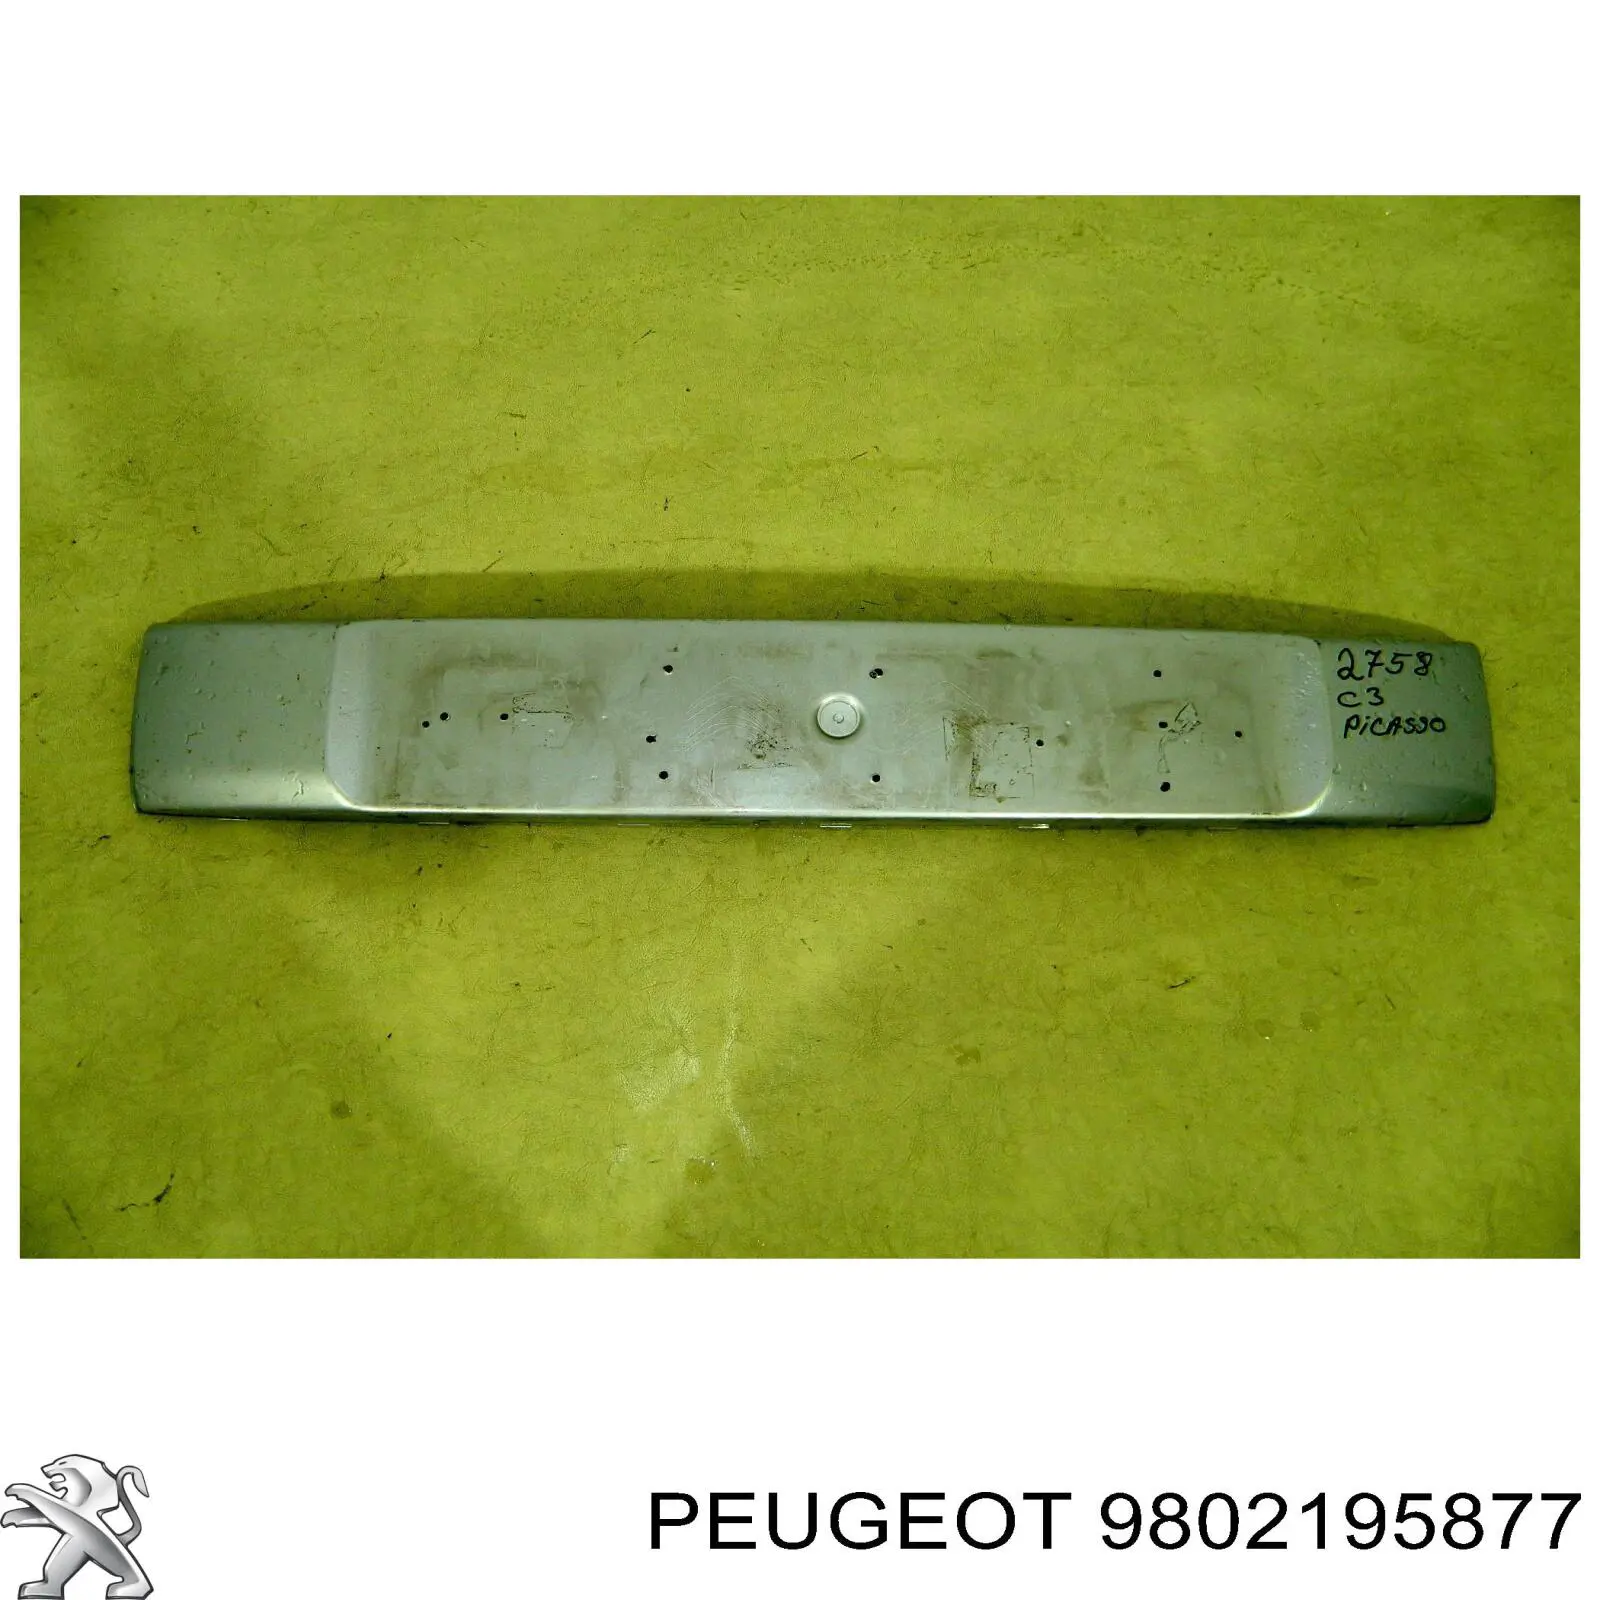 9802195877 Peugeot/Citroen